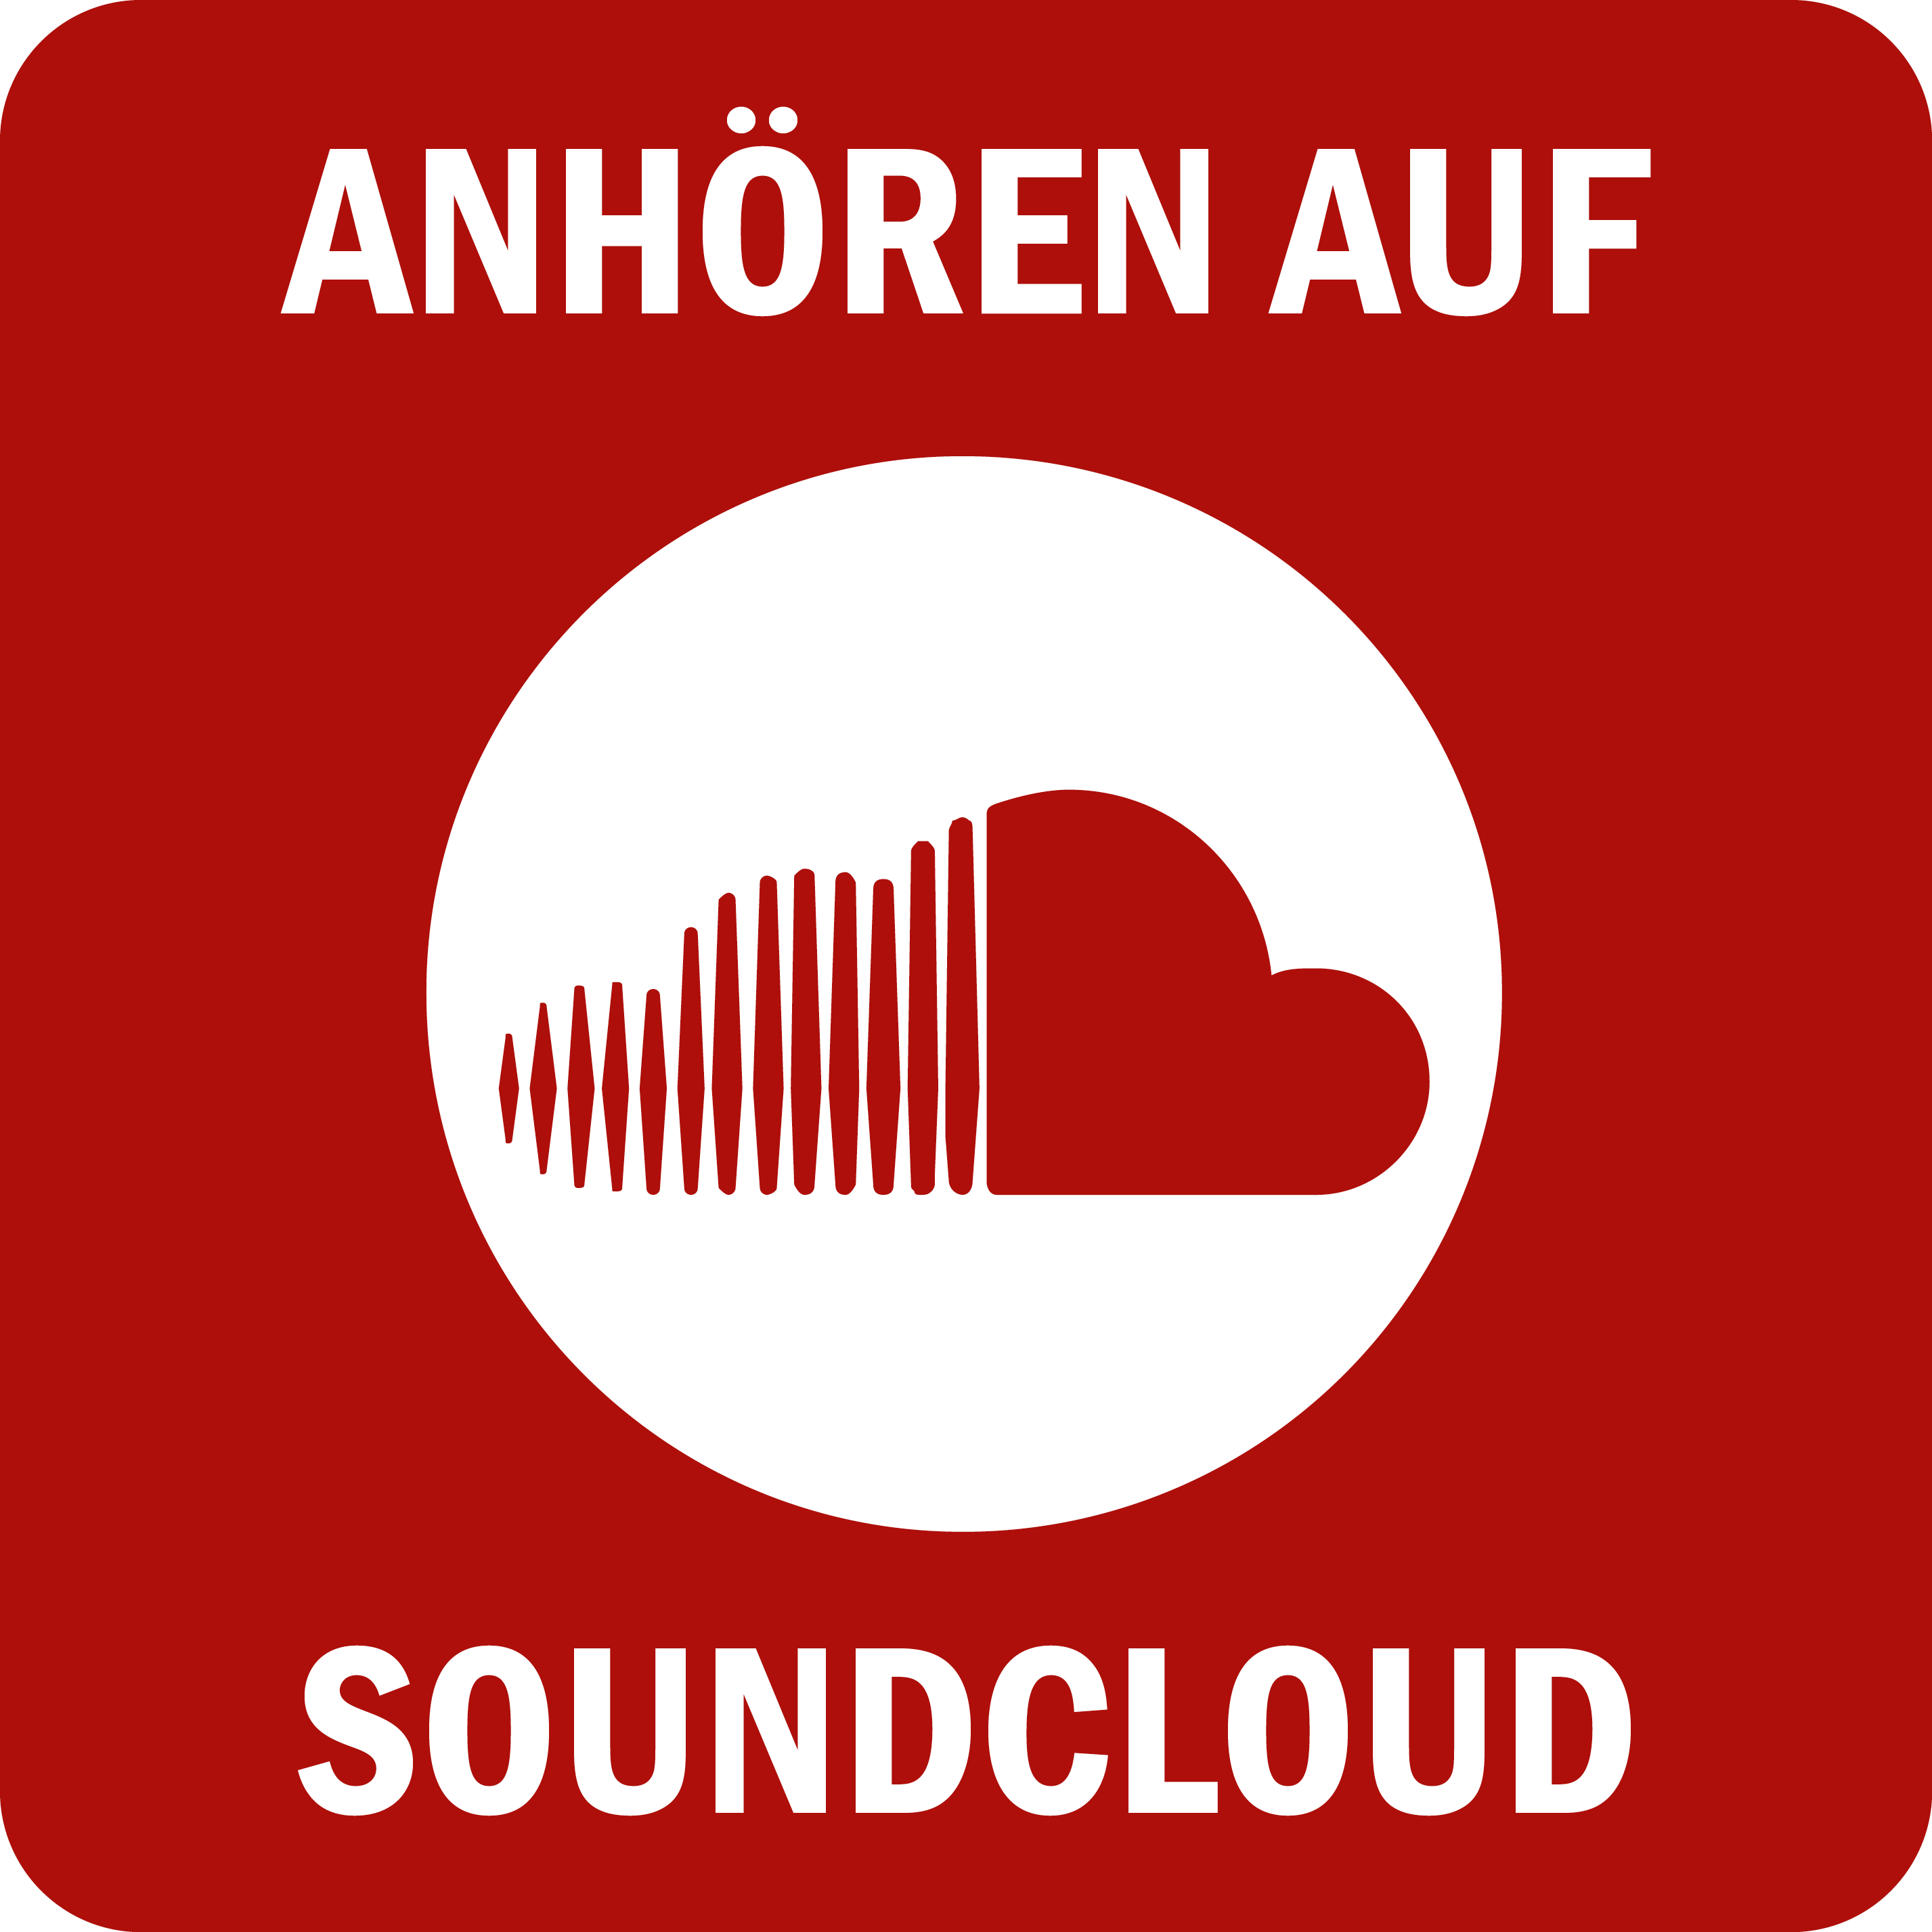 Link to Soundcloud